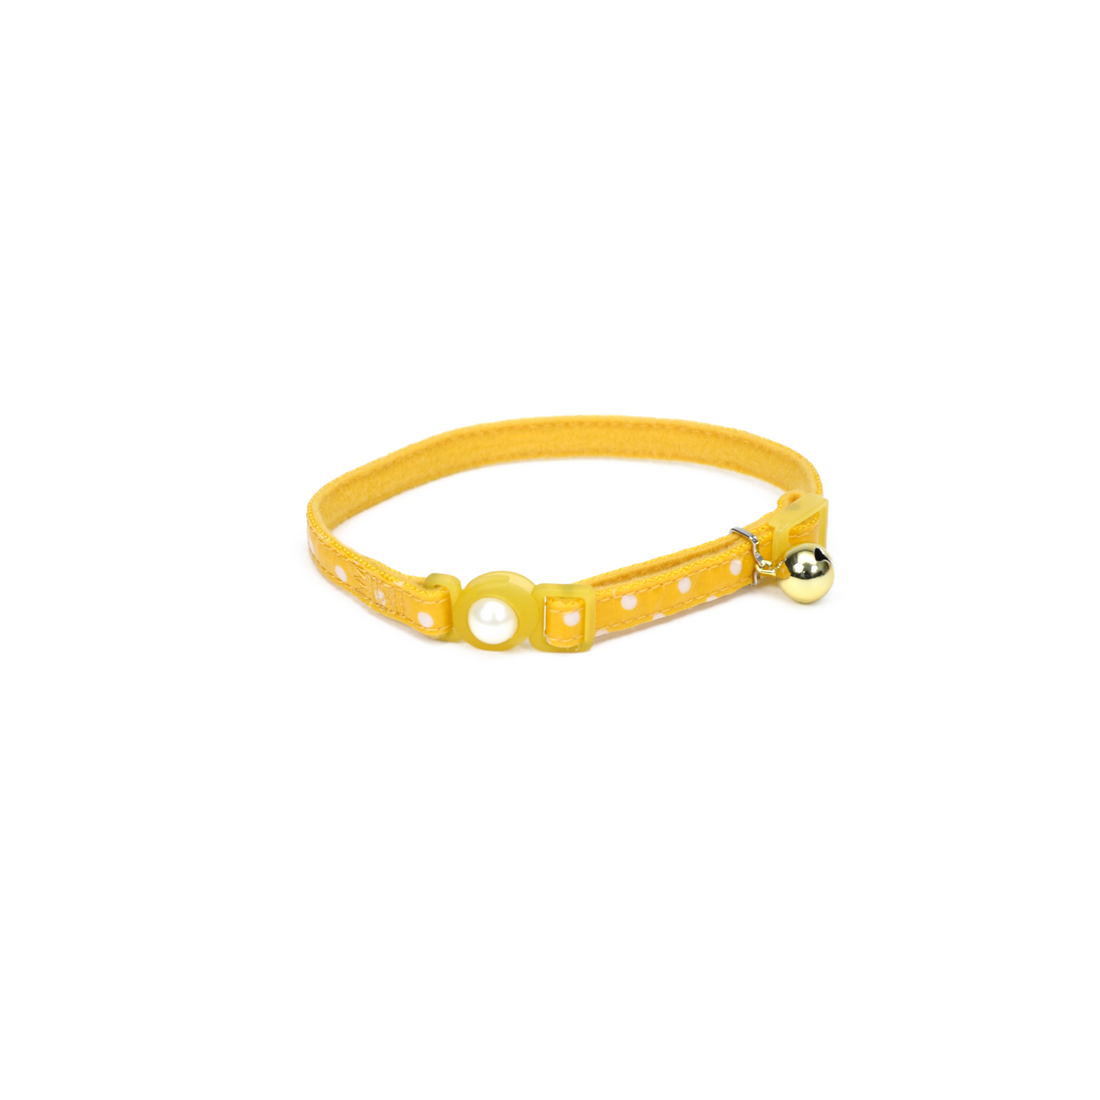 Coastal 3 and Safe Cat Fashion Collar with Polka Dot Overlay Yellow